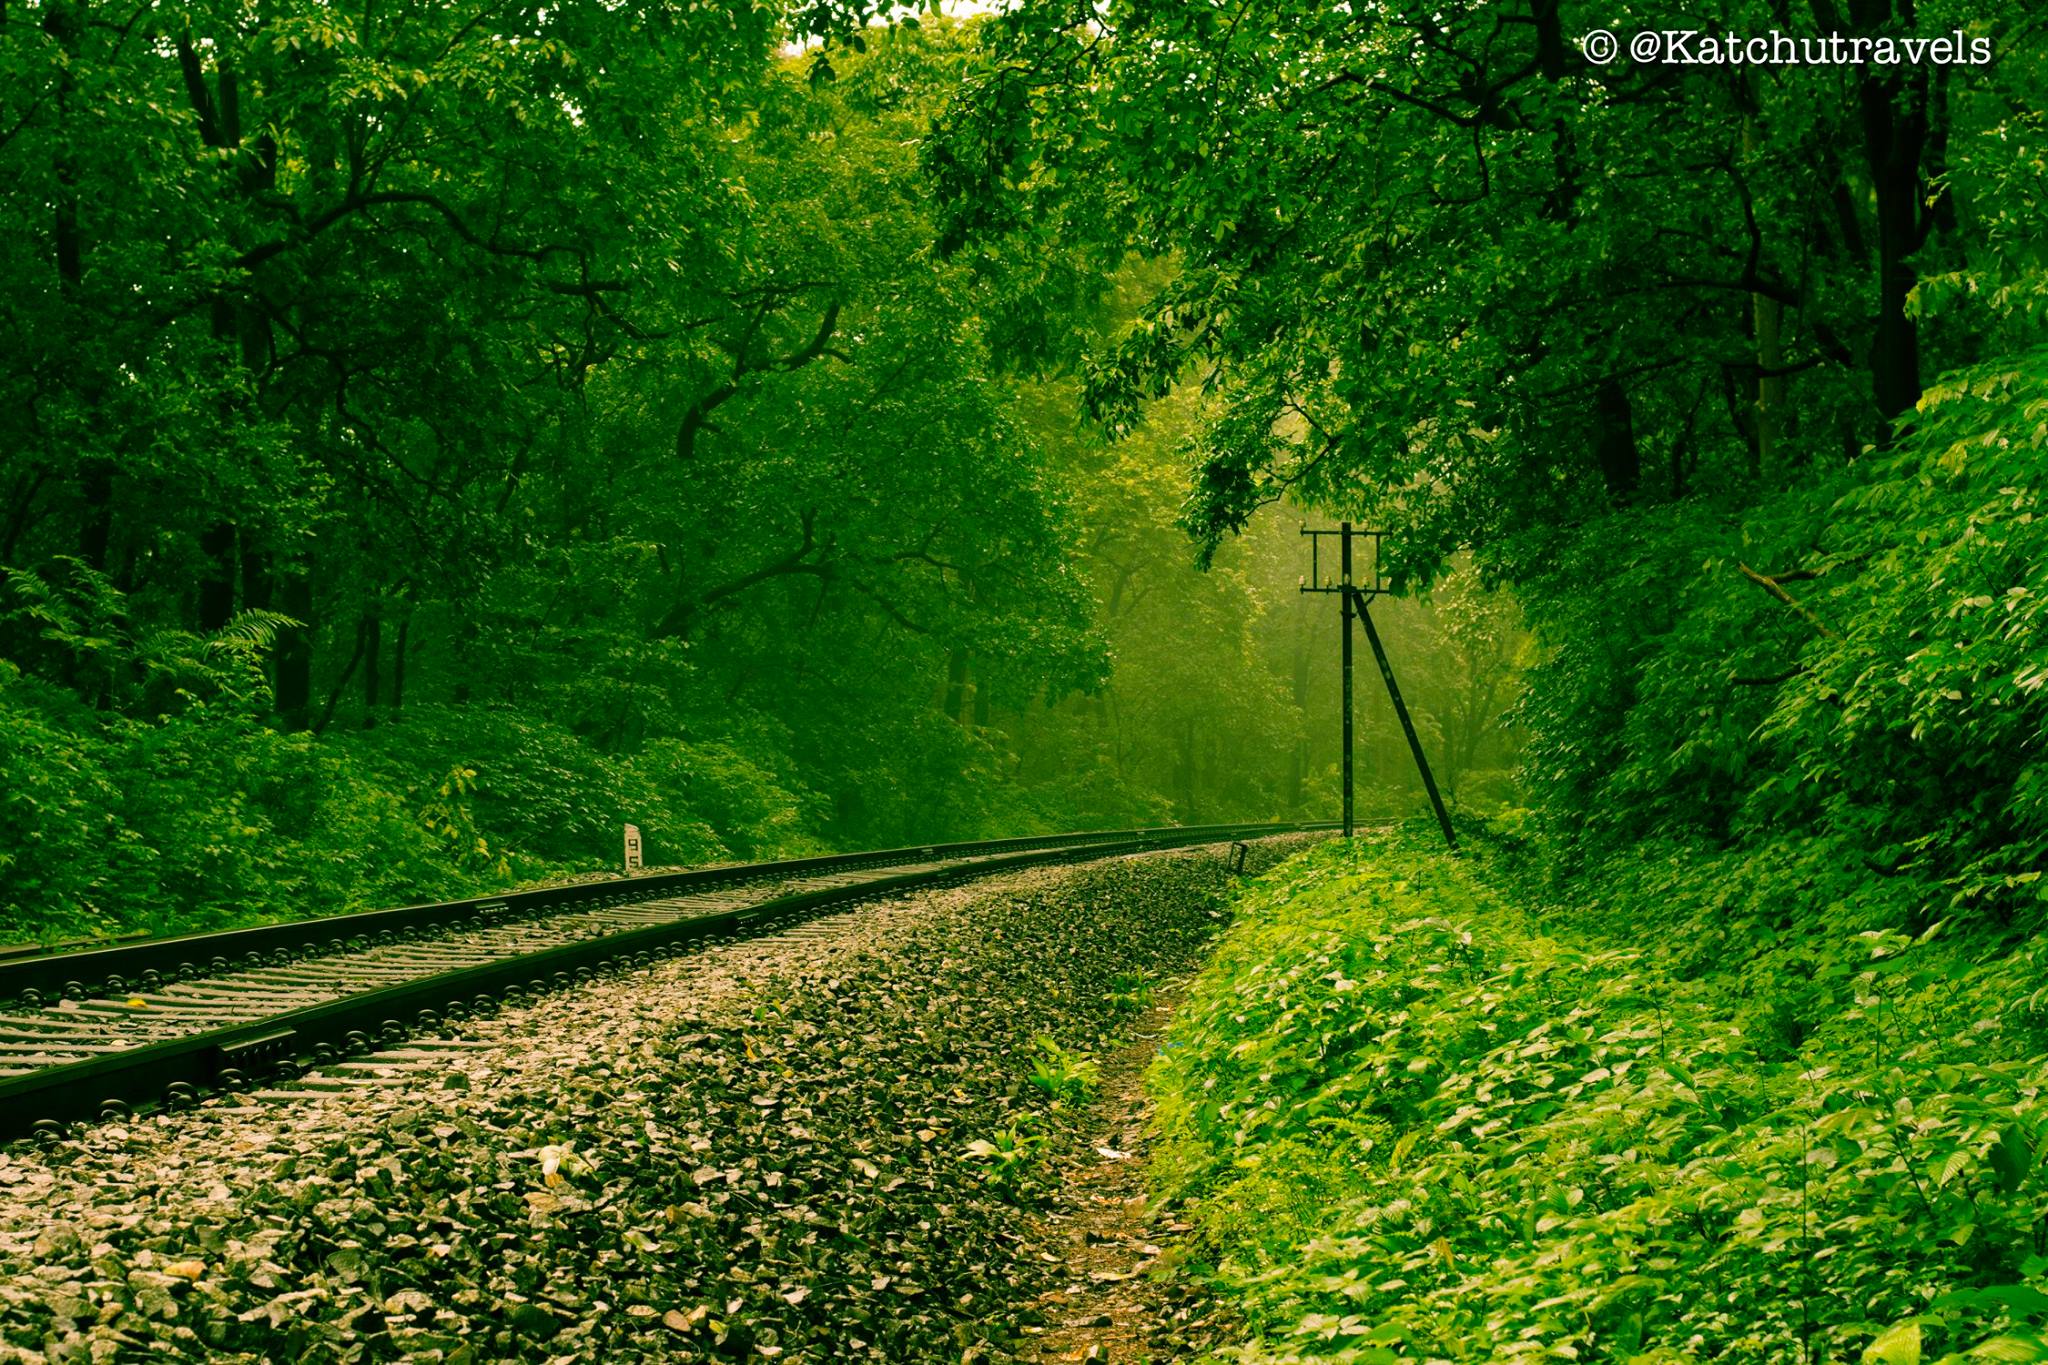 Railways crossing through verdant scenery in Goa(Kulem)